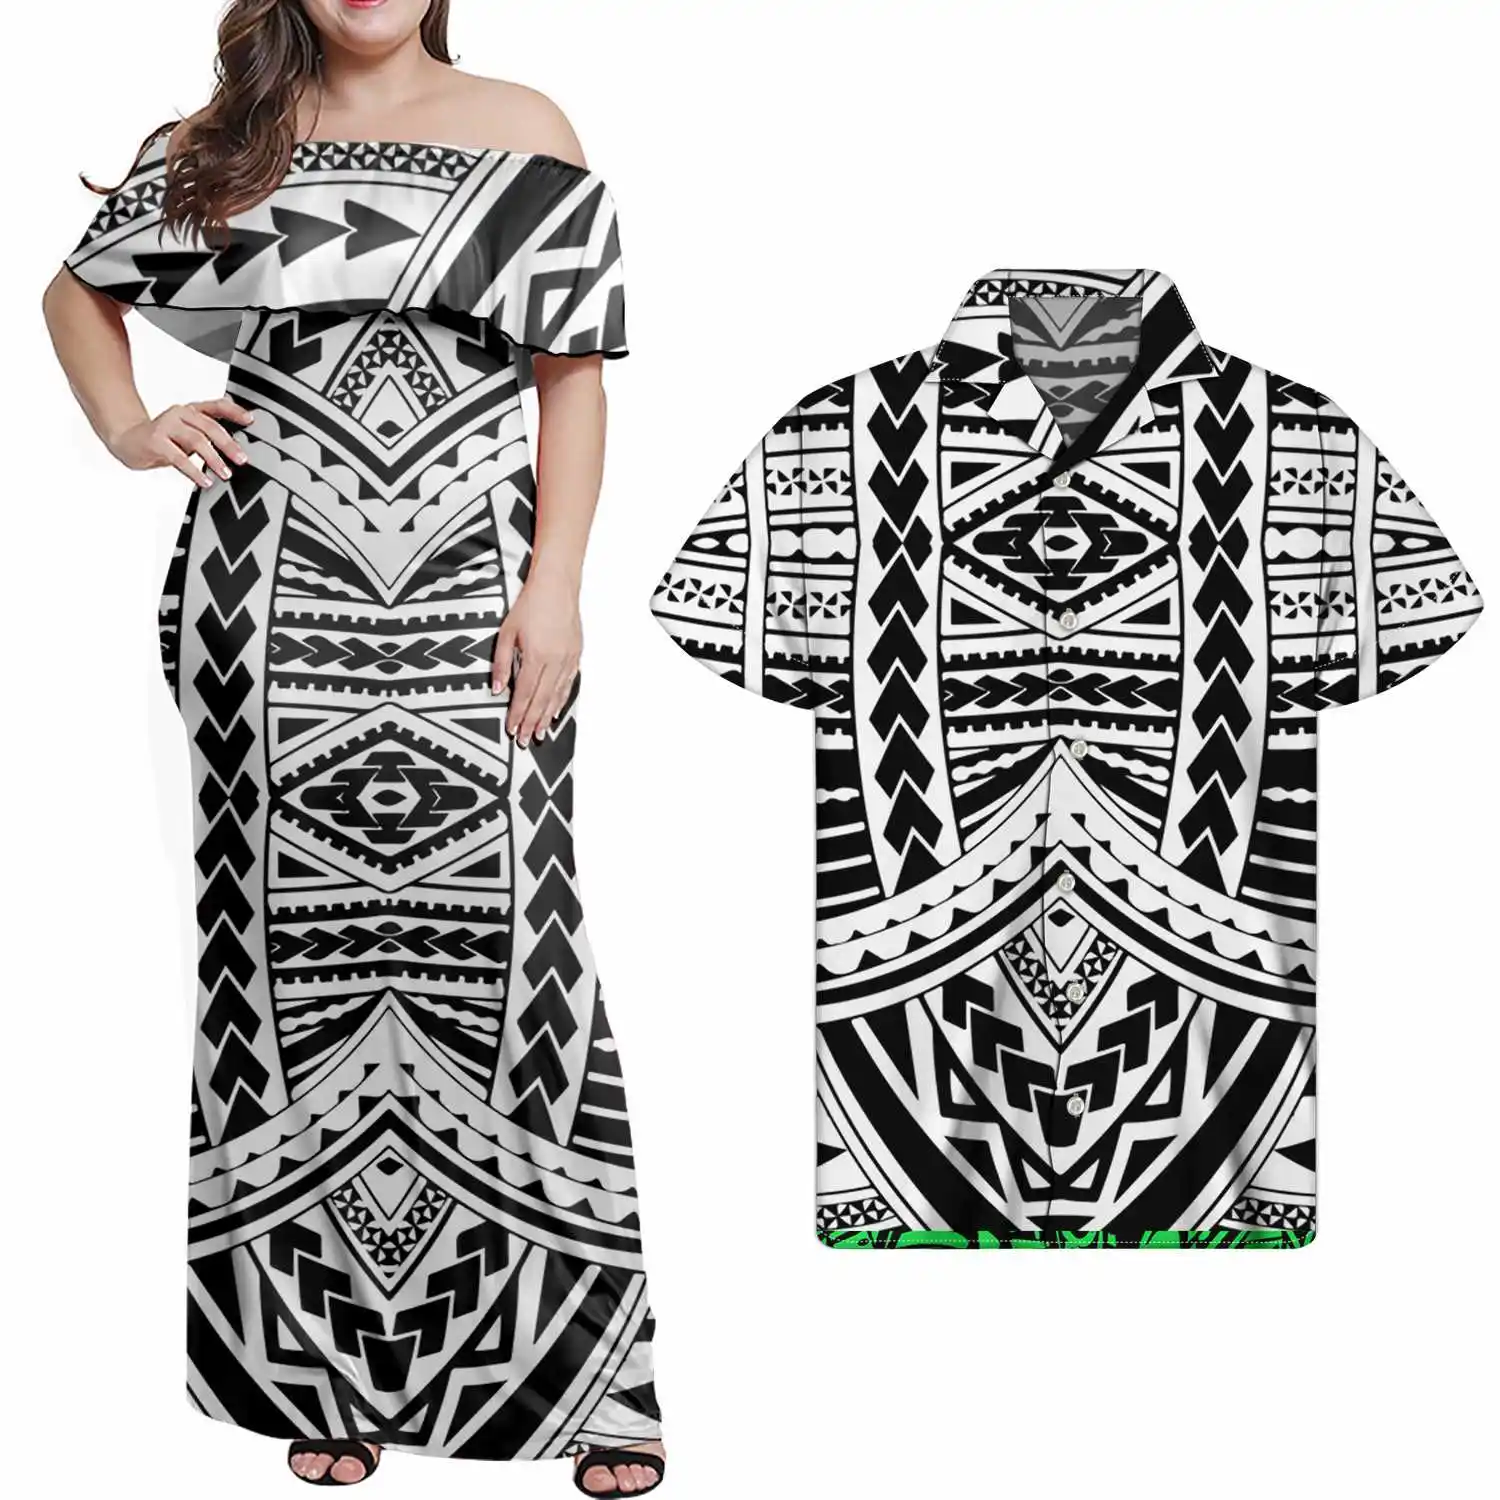 Black White Gray Polynesian Tribal Dress Geometric Stripes Print 2 pcs Sets Fashion One Shoulder Ruffle Dresses Match Men Shirts